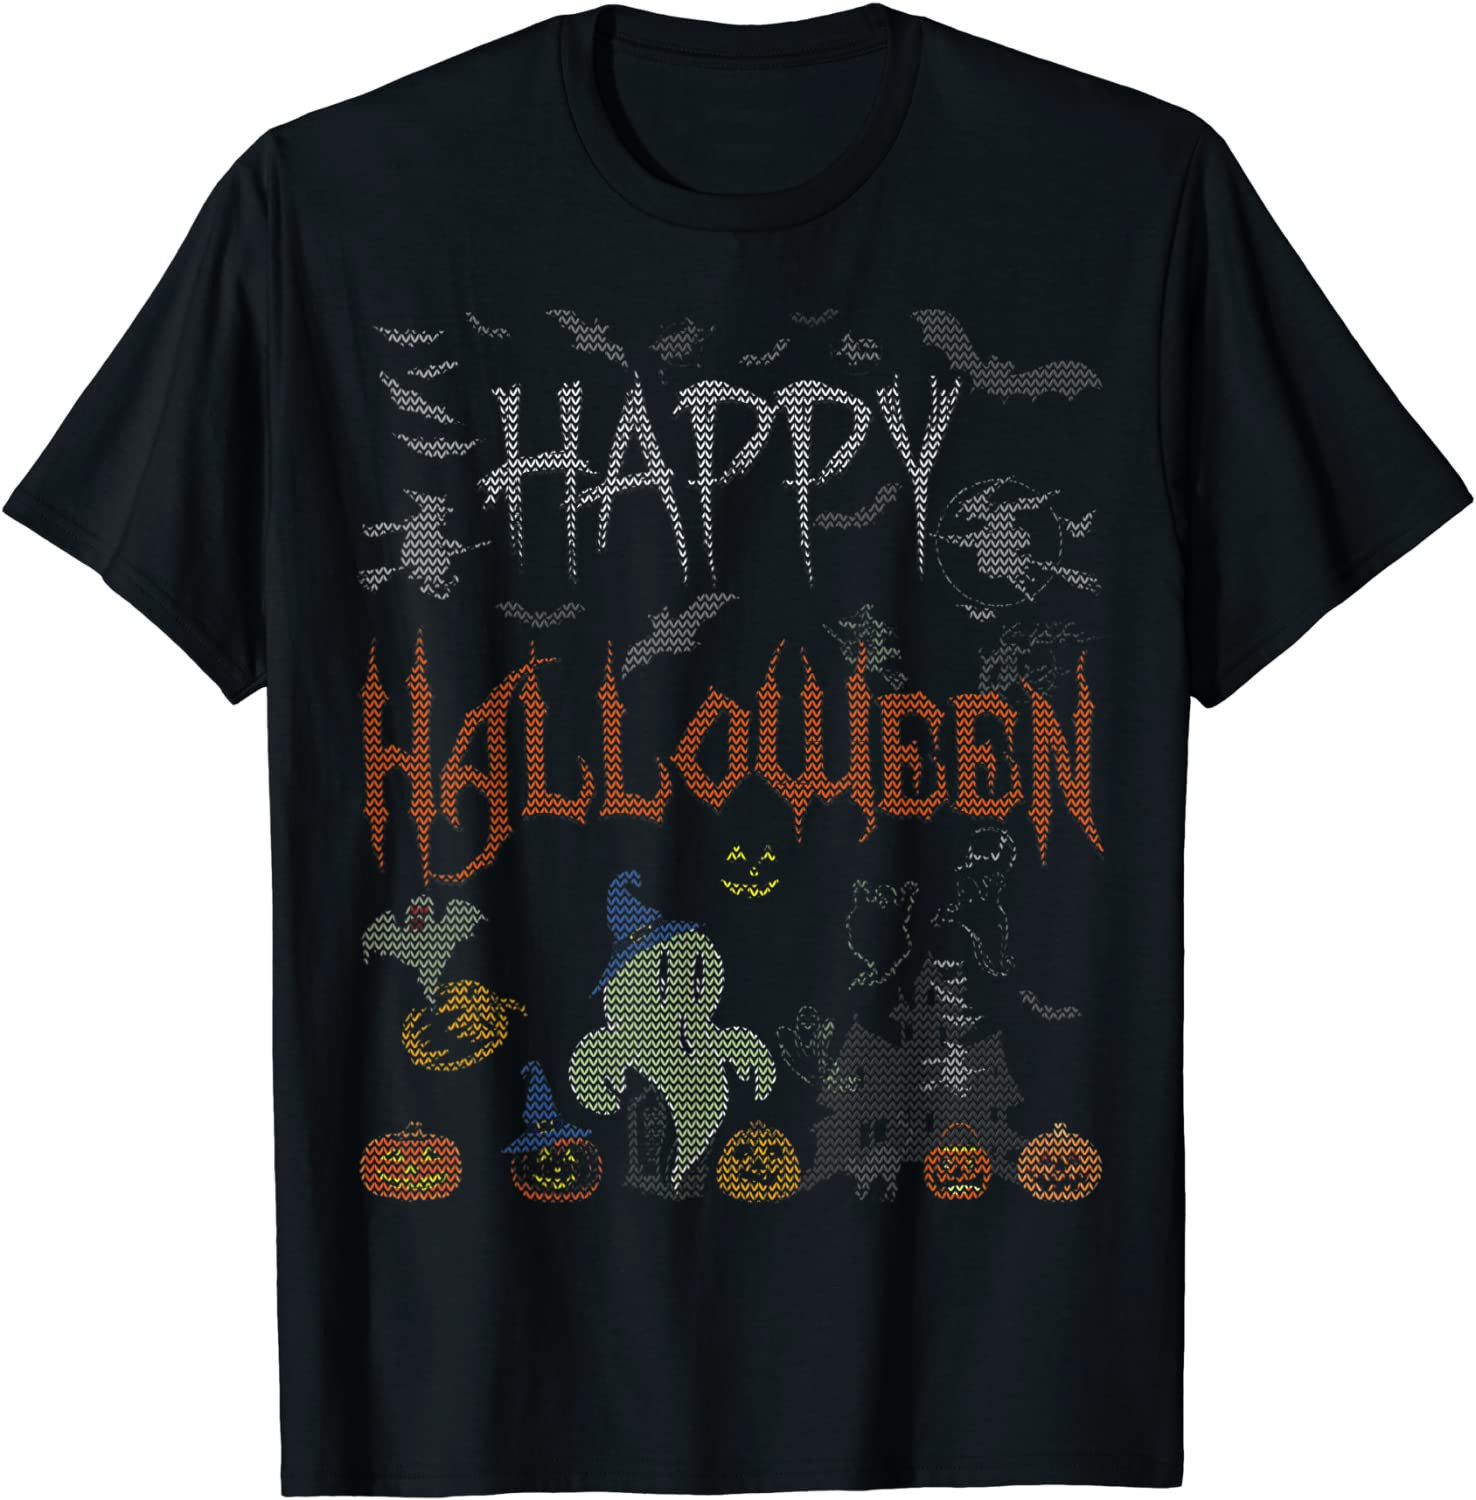 Happy Halloween - T-Shirt